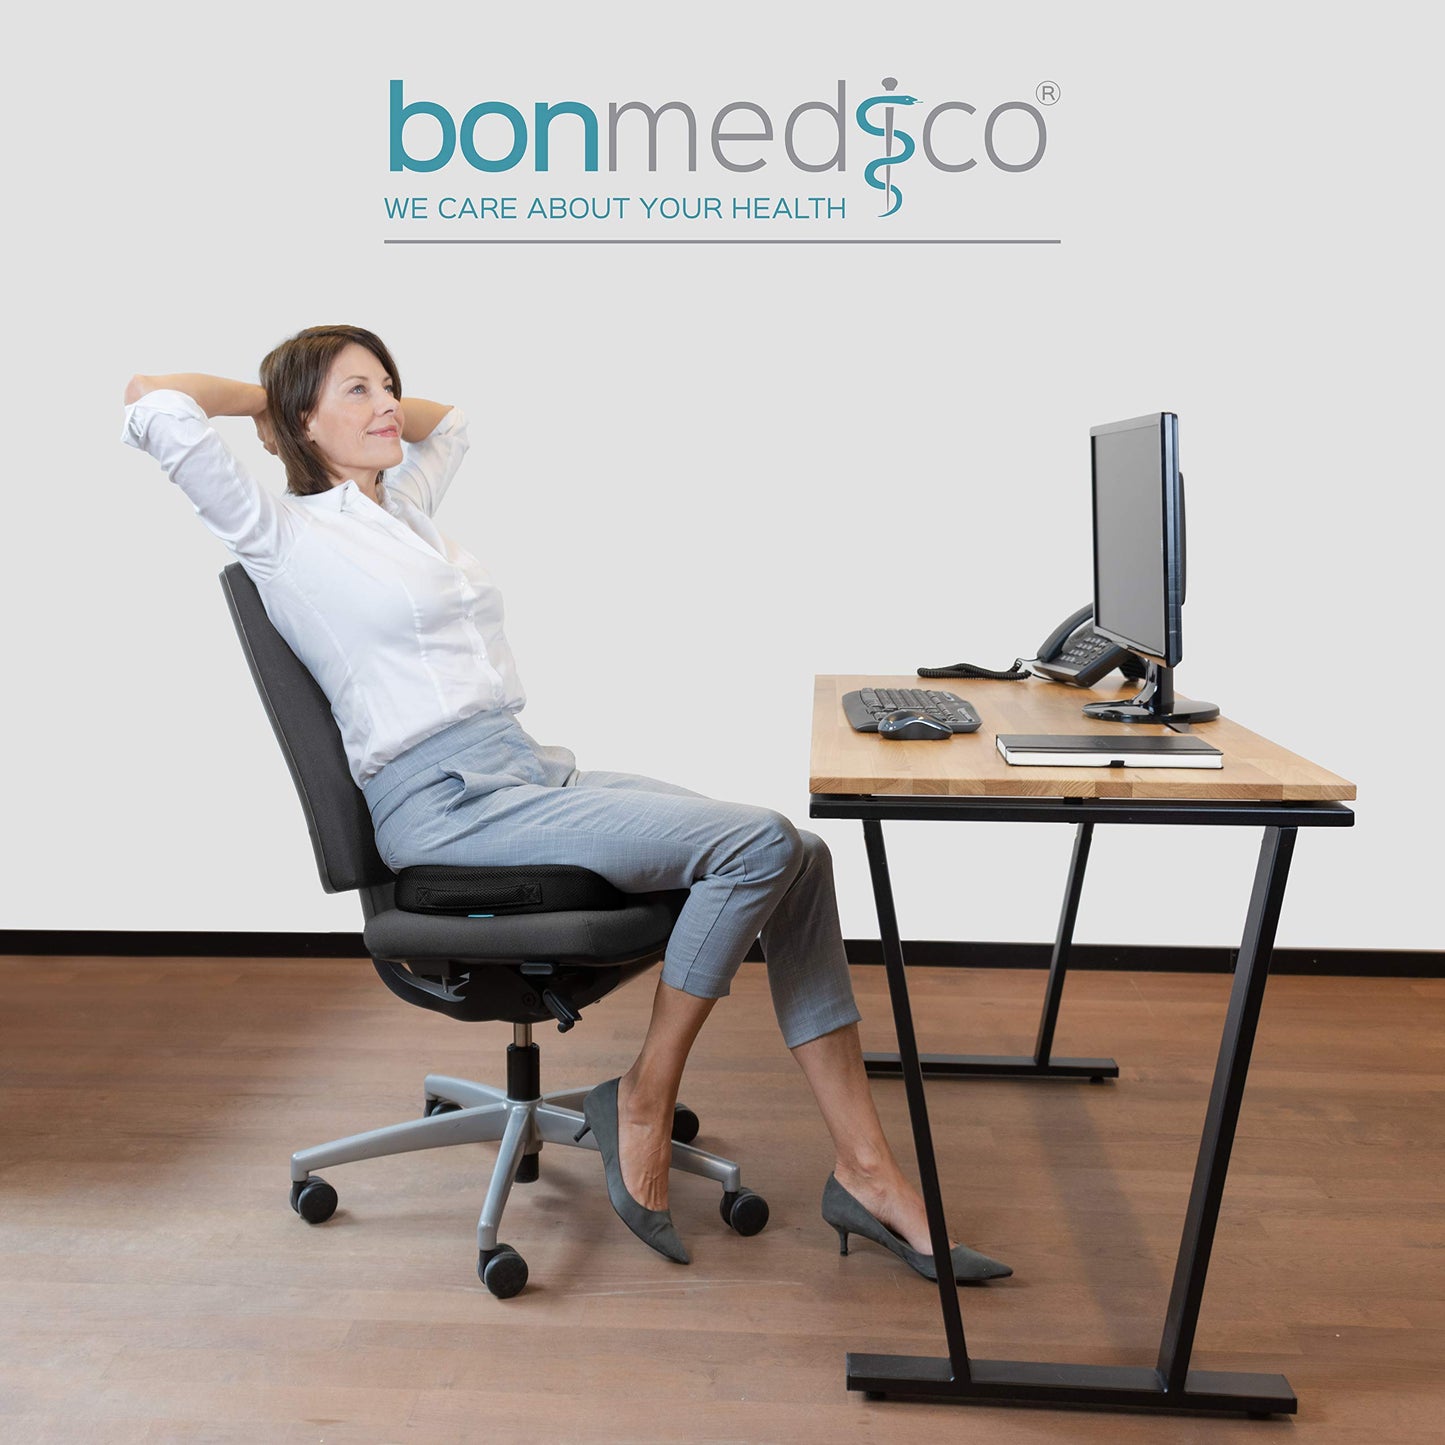 bonmedico Firm Orthopedic Donut Pillow and Home Office Soft Seat Cushion (Large Orthopedic Cushion)